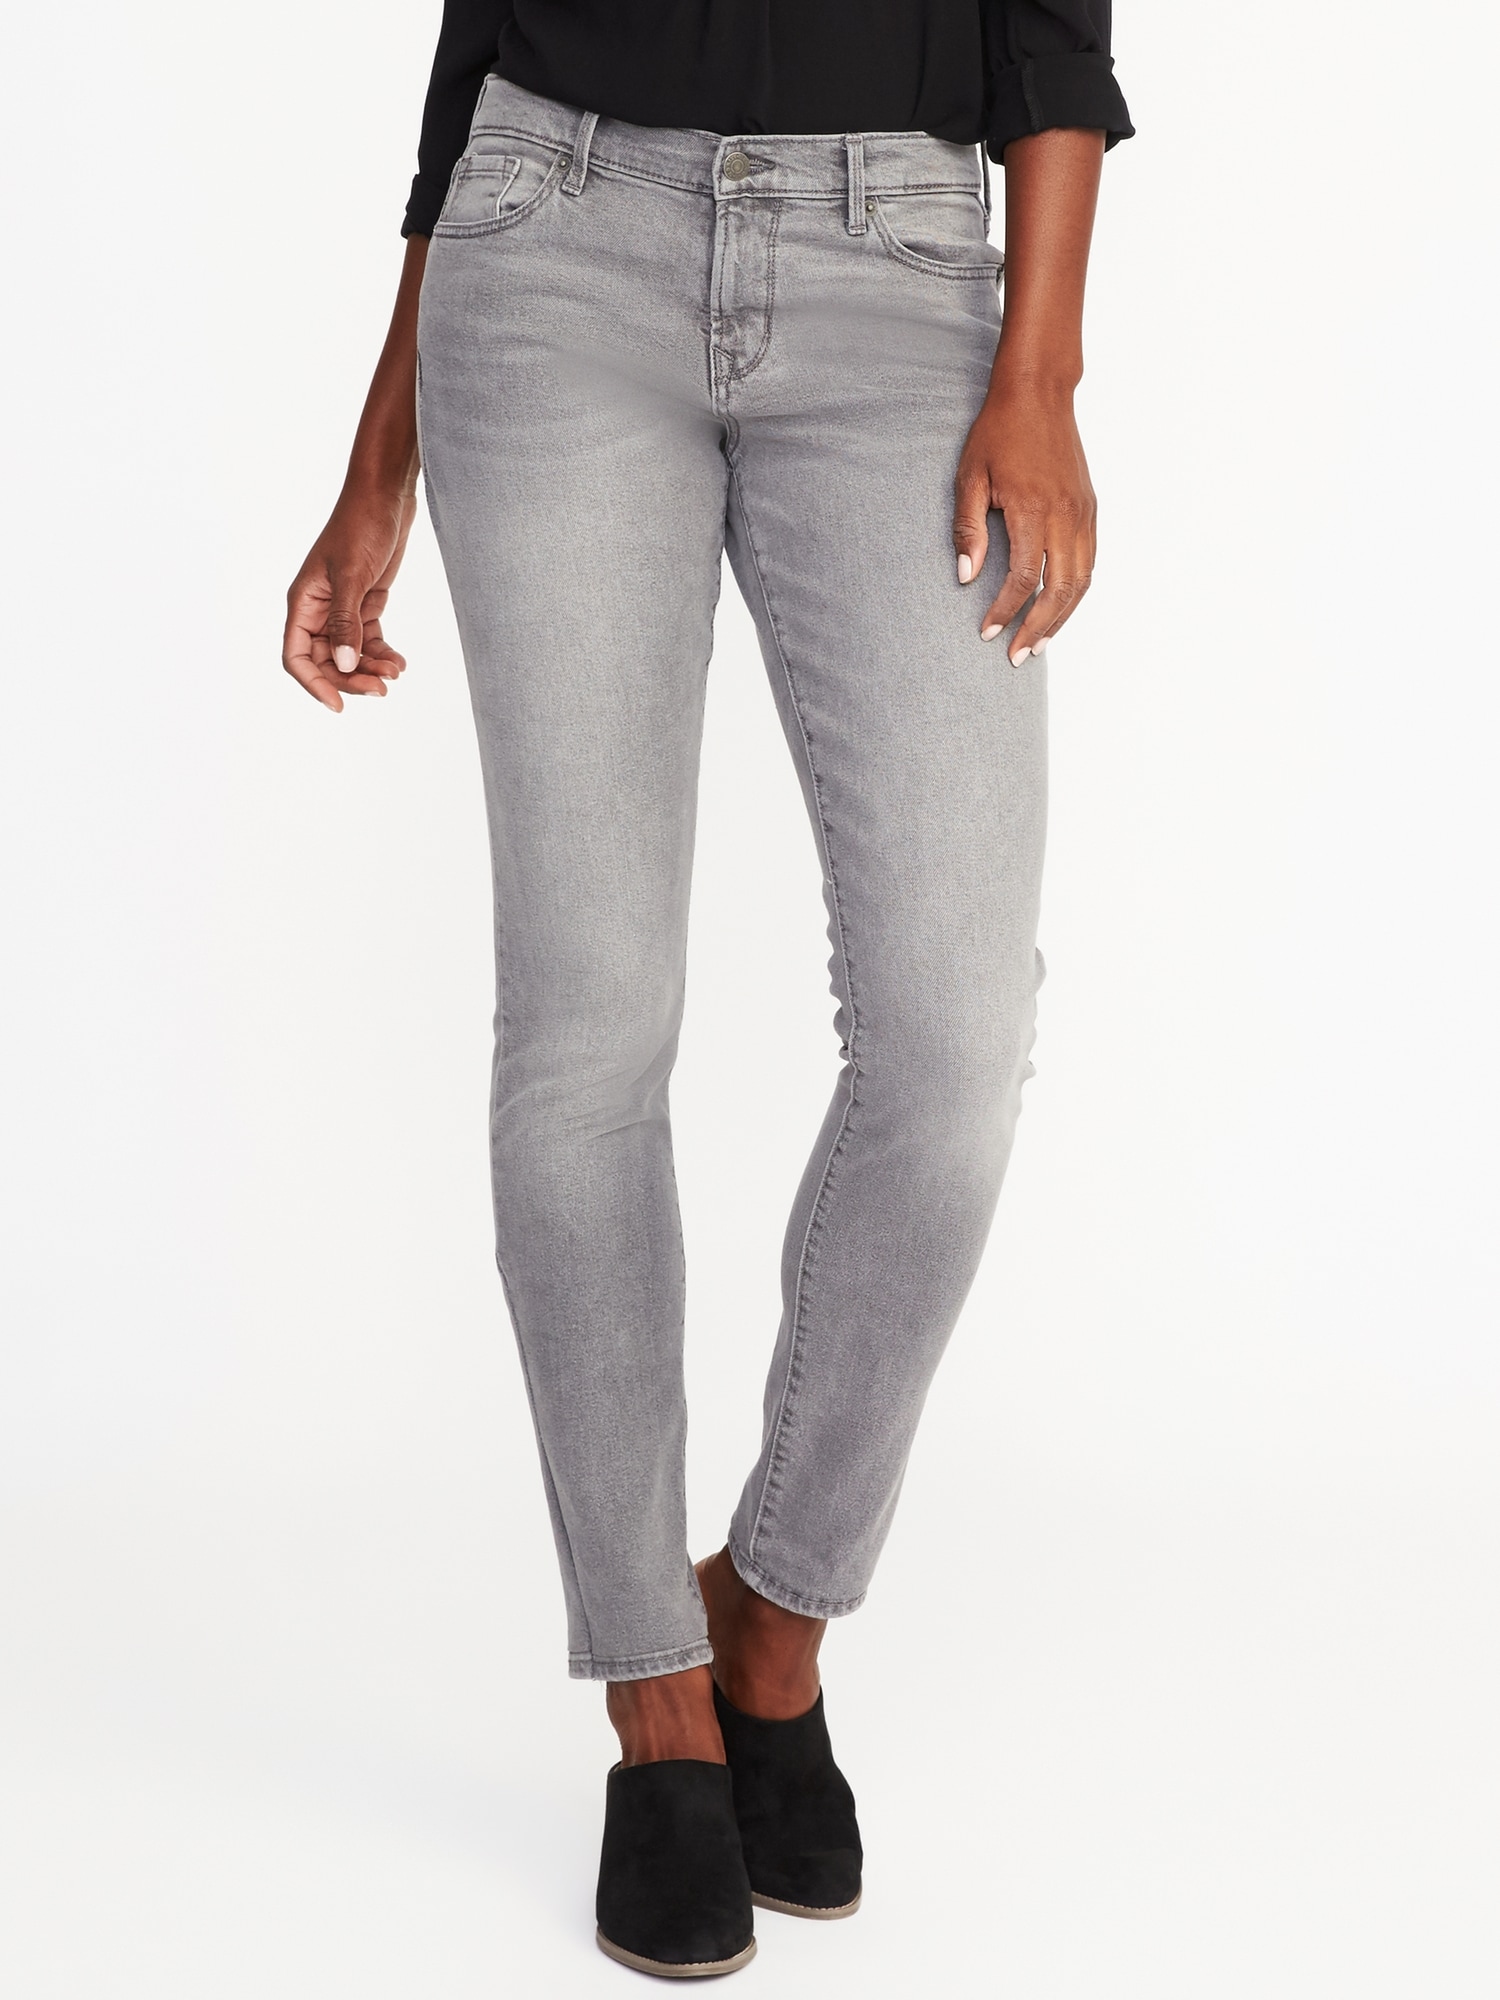 Gray Jeans For Women